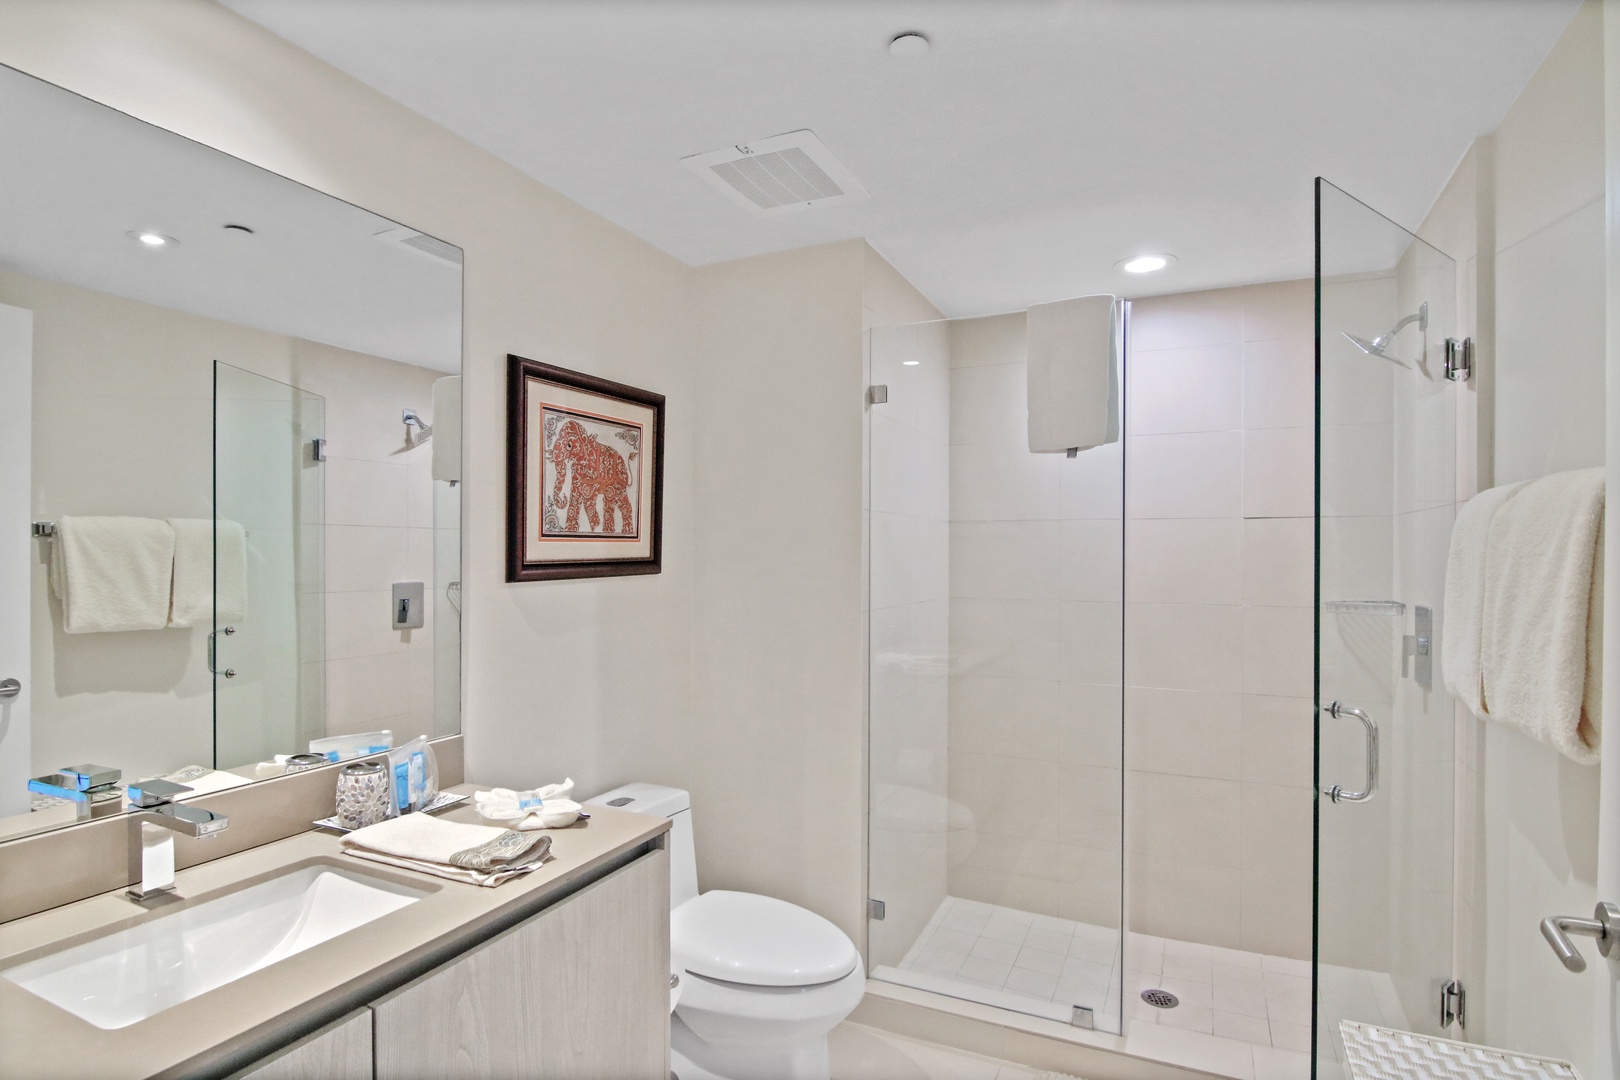 A third full bathroom includes a spacious single vanity & spa-like glass shower